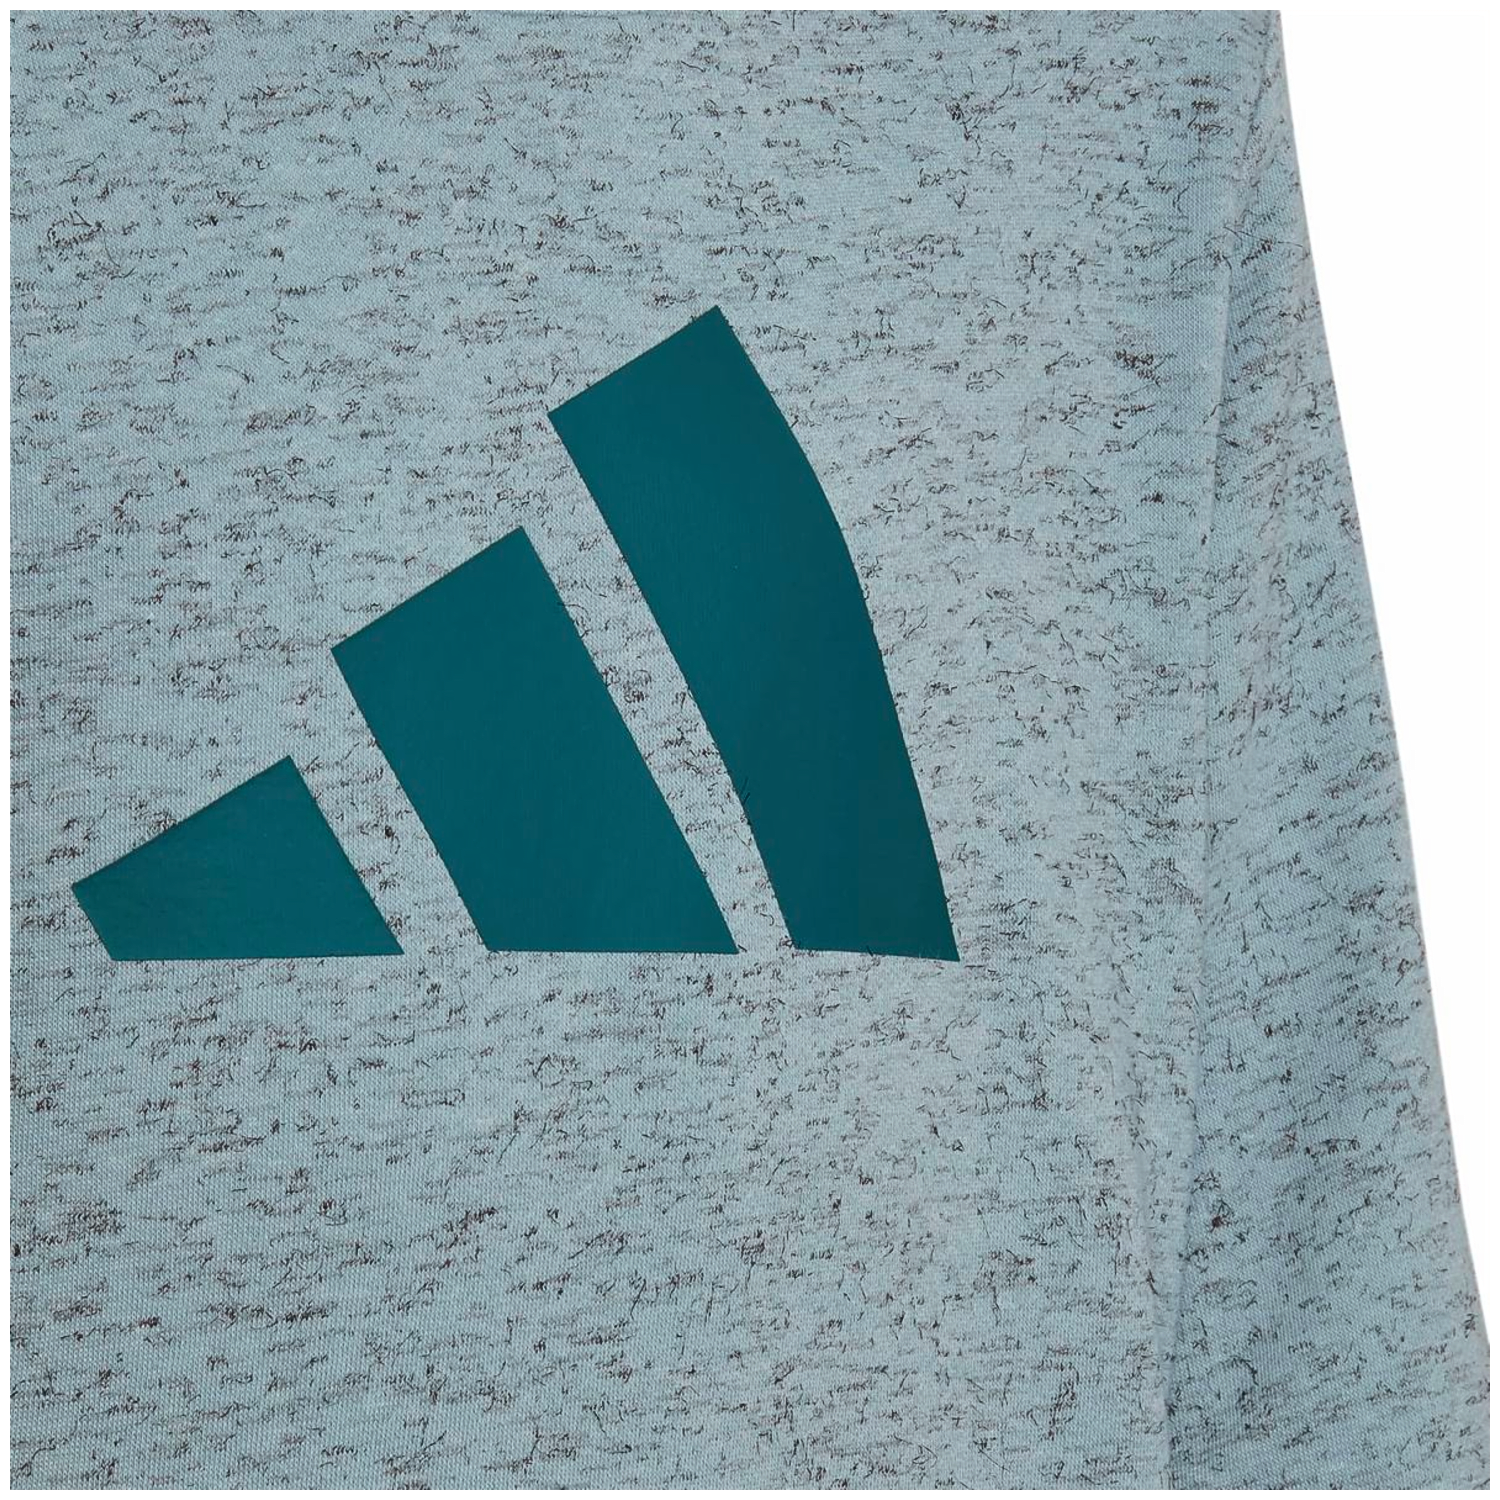 Adidas Future Icons 3-Streifen Sweatshirt Kinder